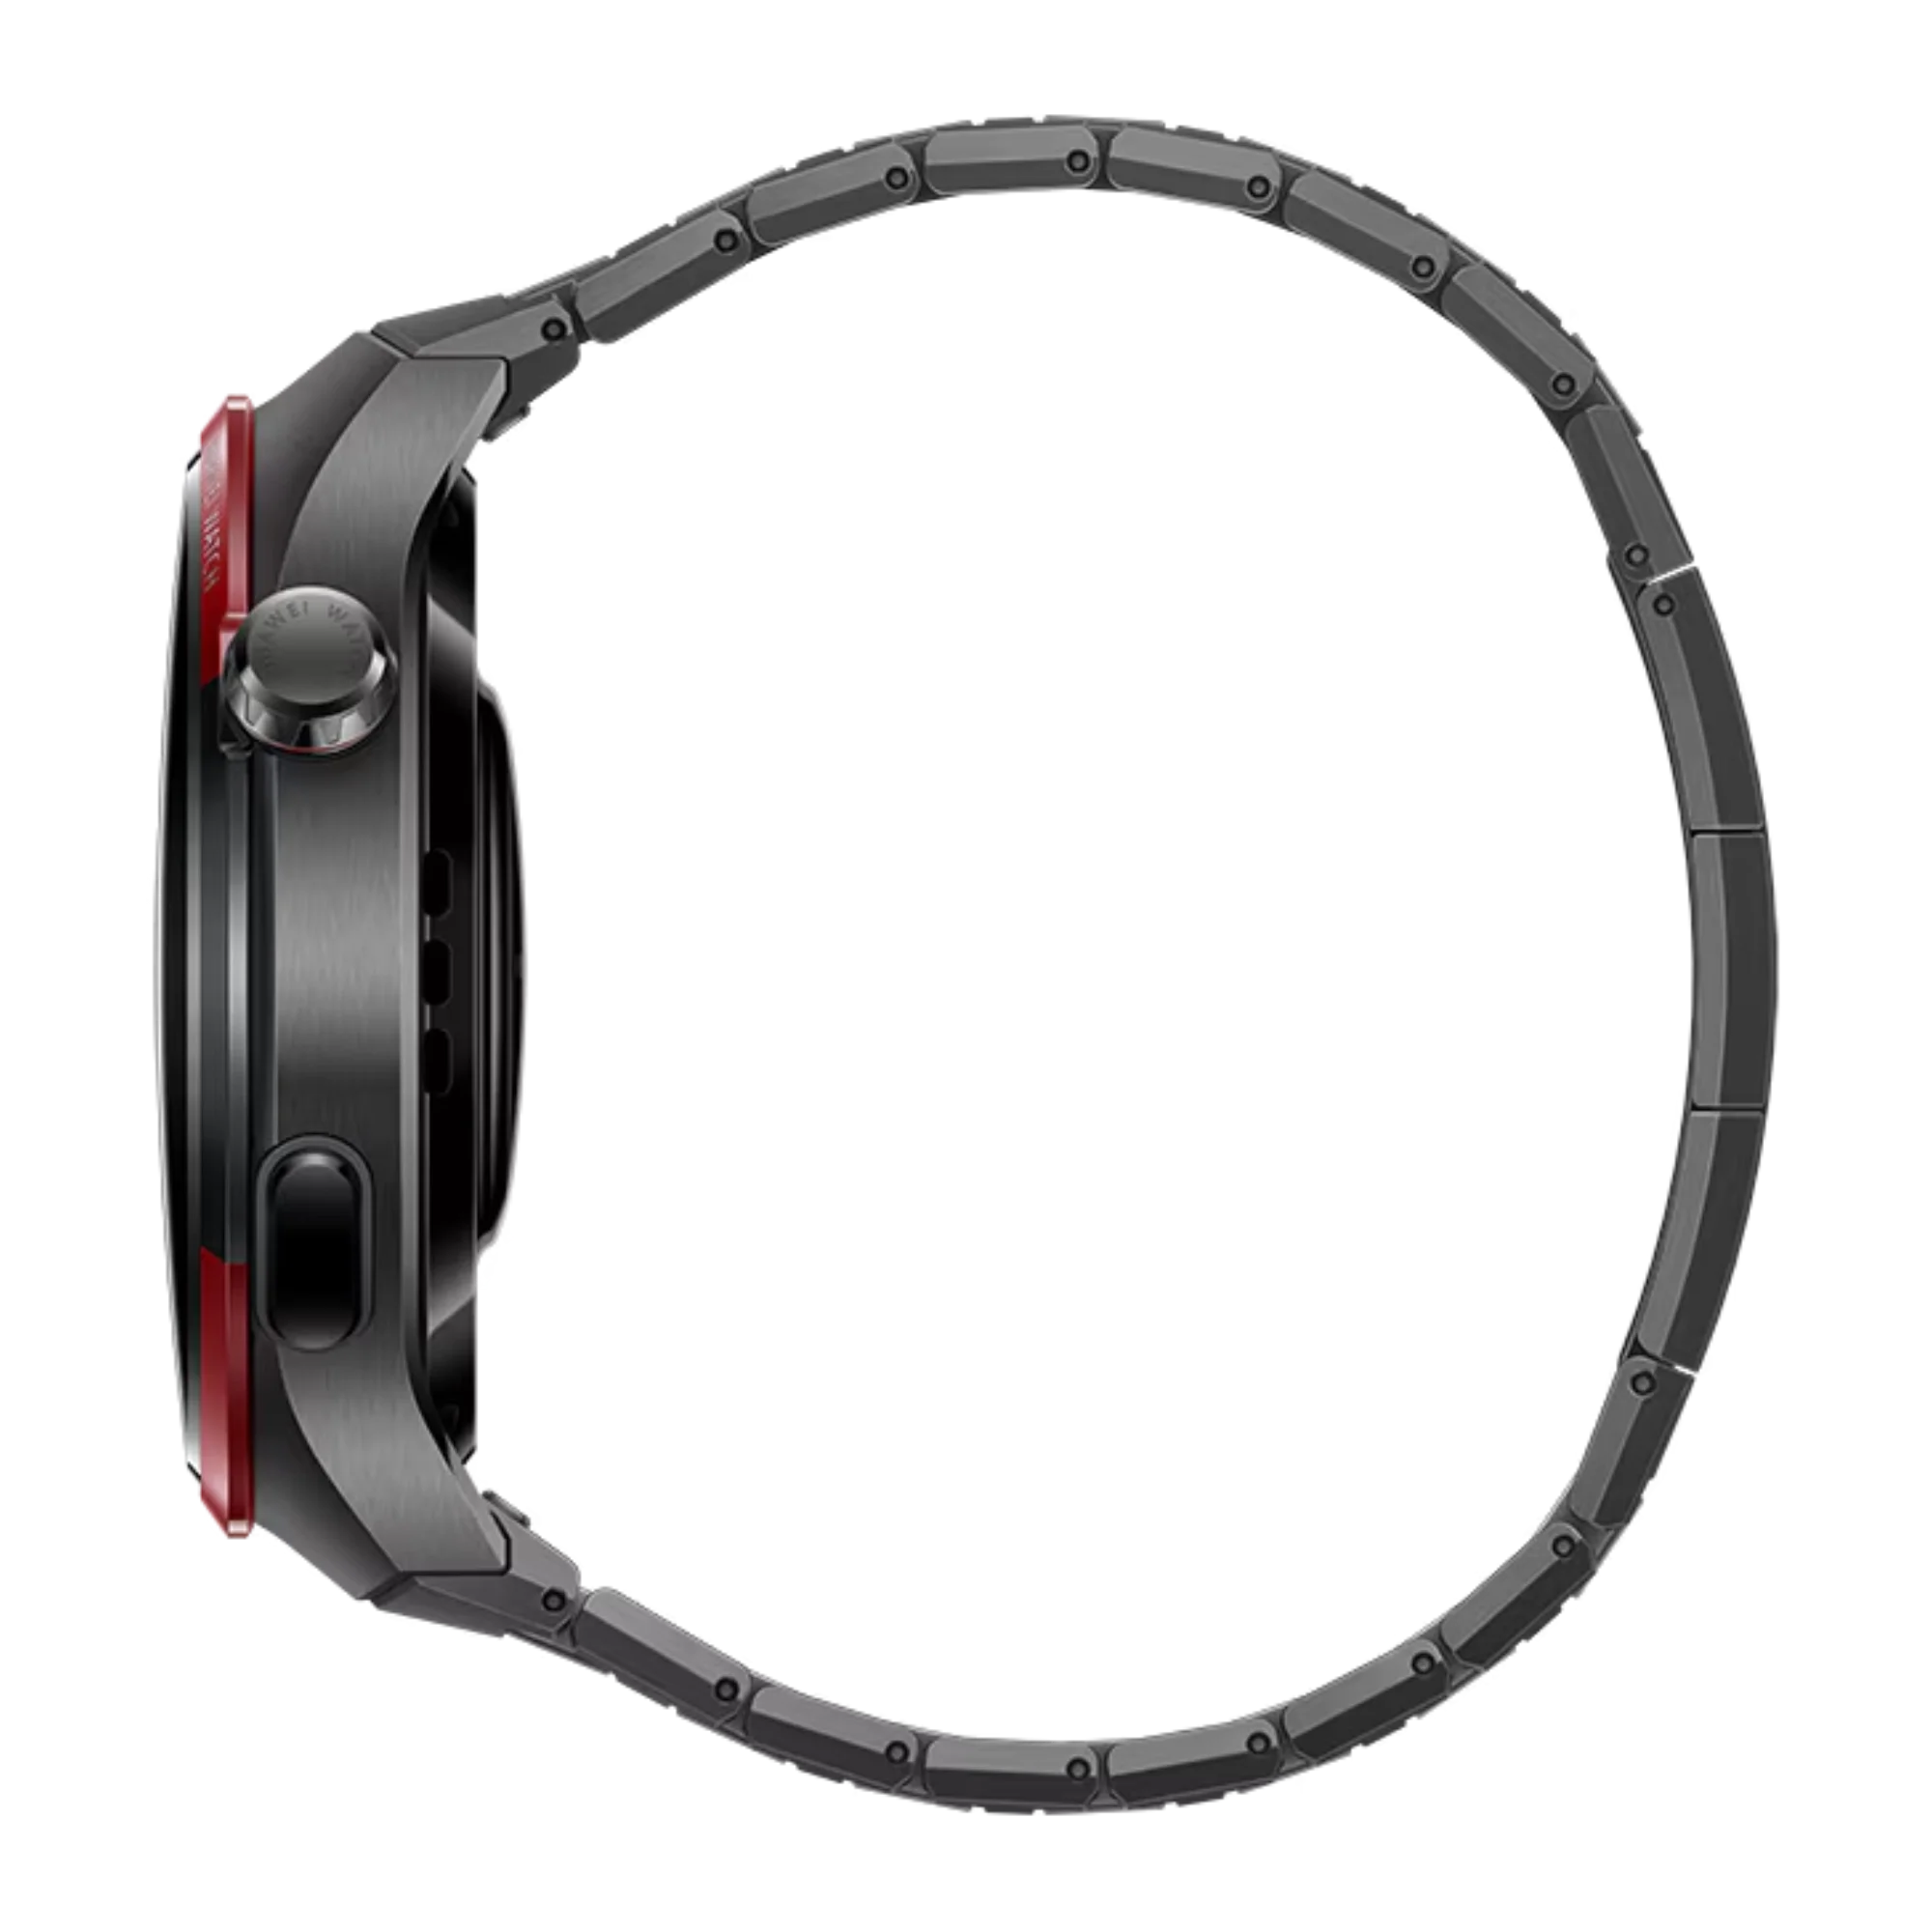 Foto: Smartwatch Huawei Watch 4 Pro Space Edition